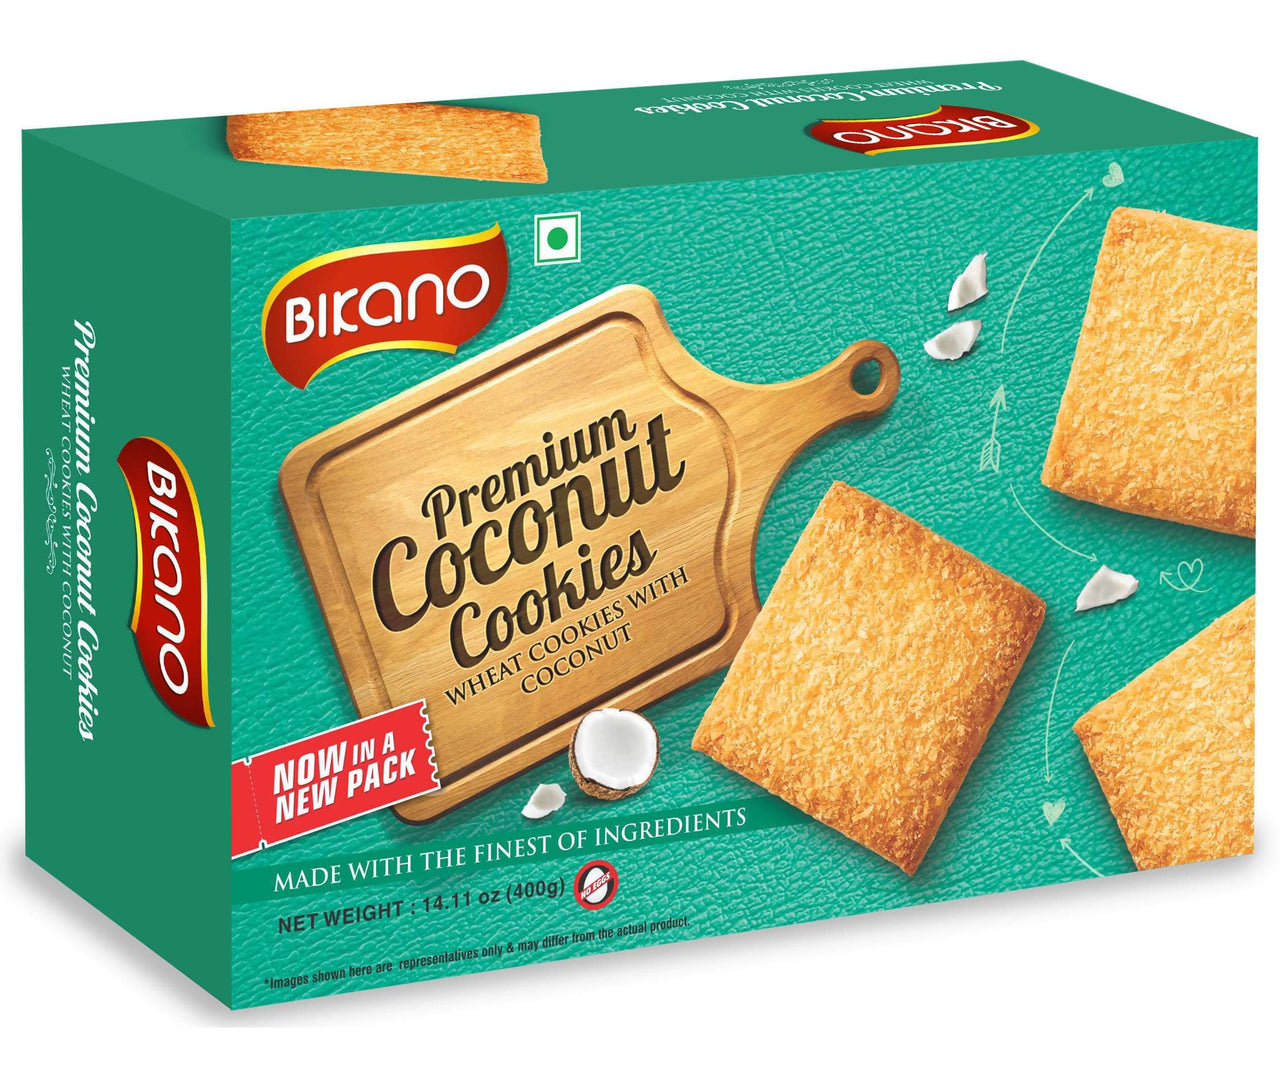 Bikano Premium Coconut Cookies